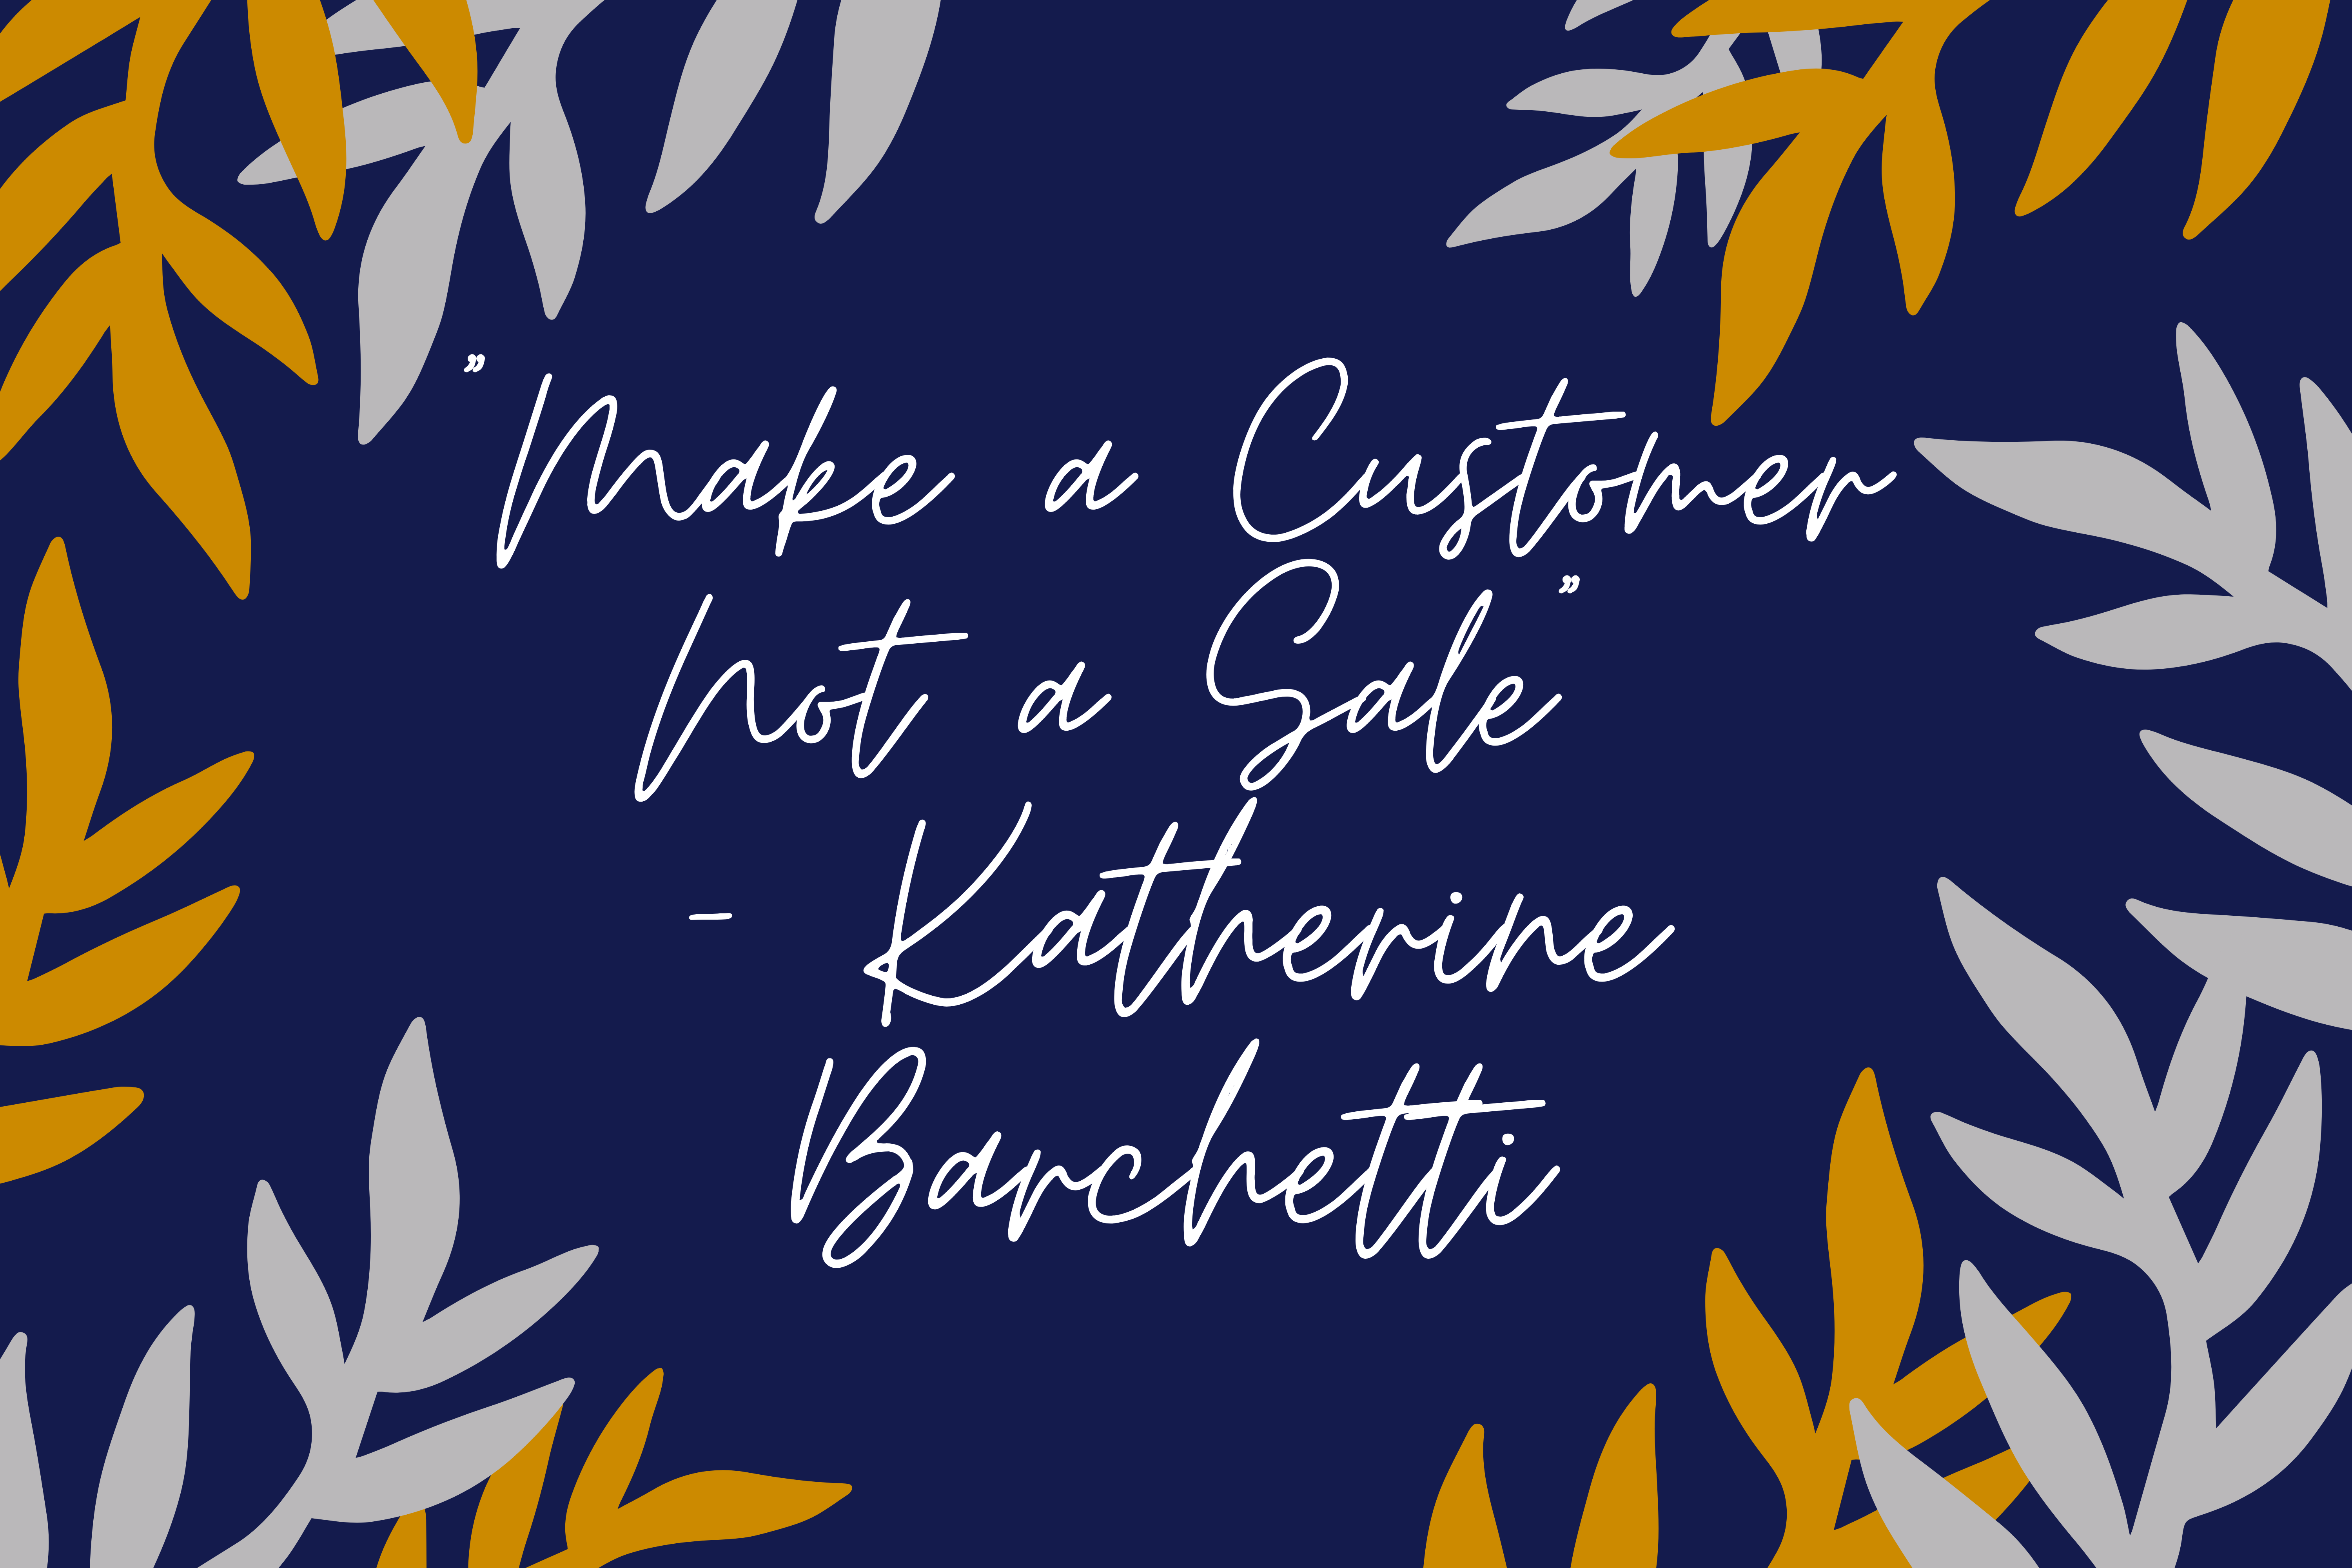 „Make a customer, not a sale.“ – Katherine Barchetti